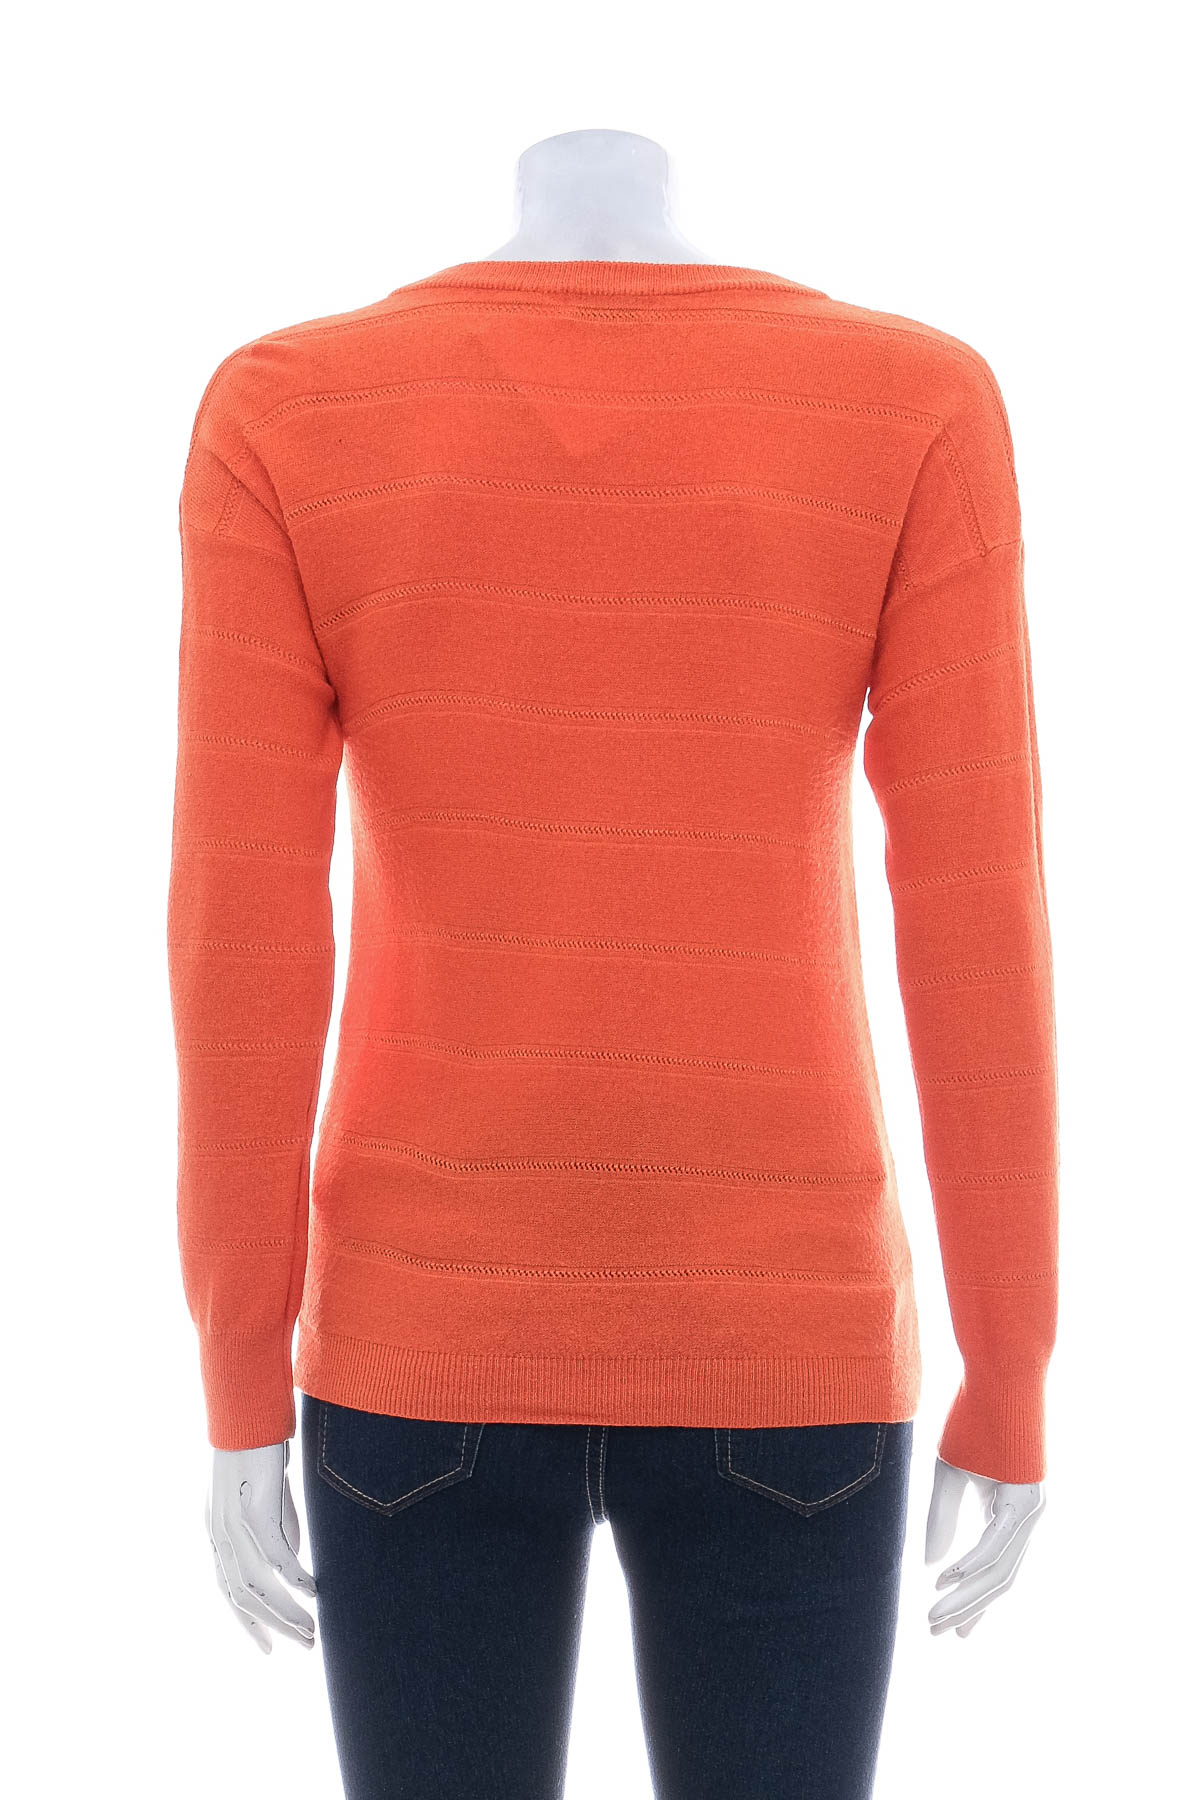 Women's sweater - Jacqueline de Yong - 1